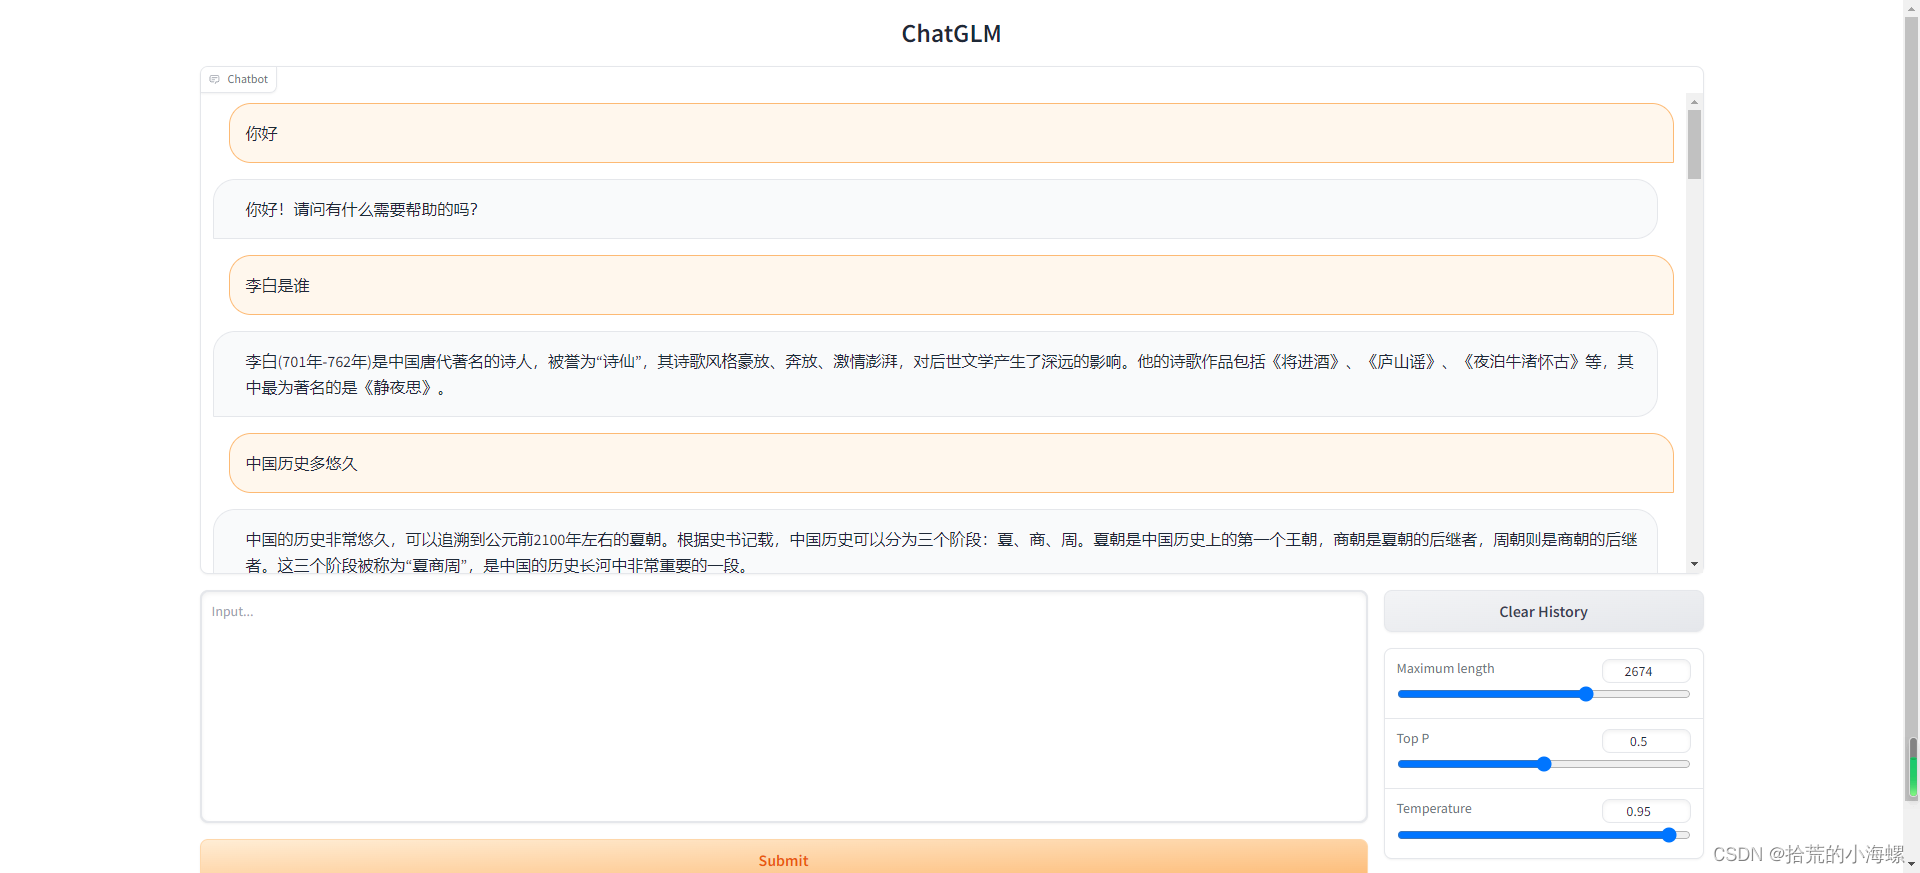 Python：清华ChatGLM-6B中文对话模型部署